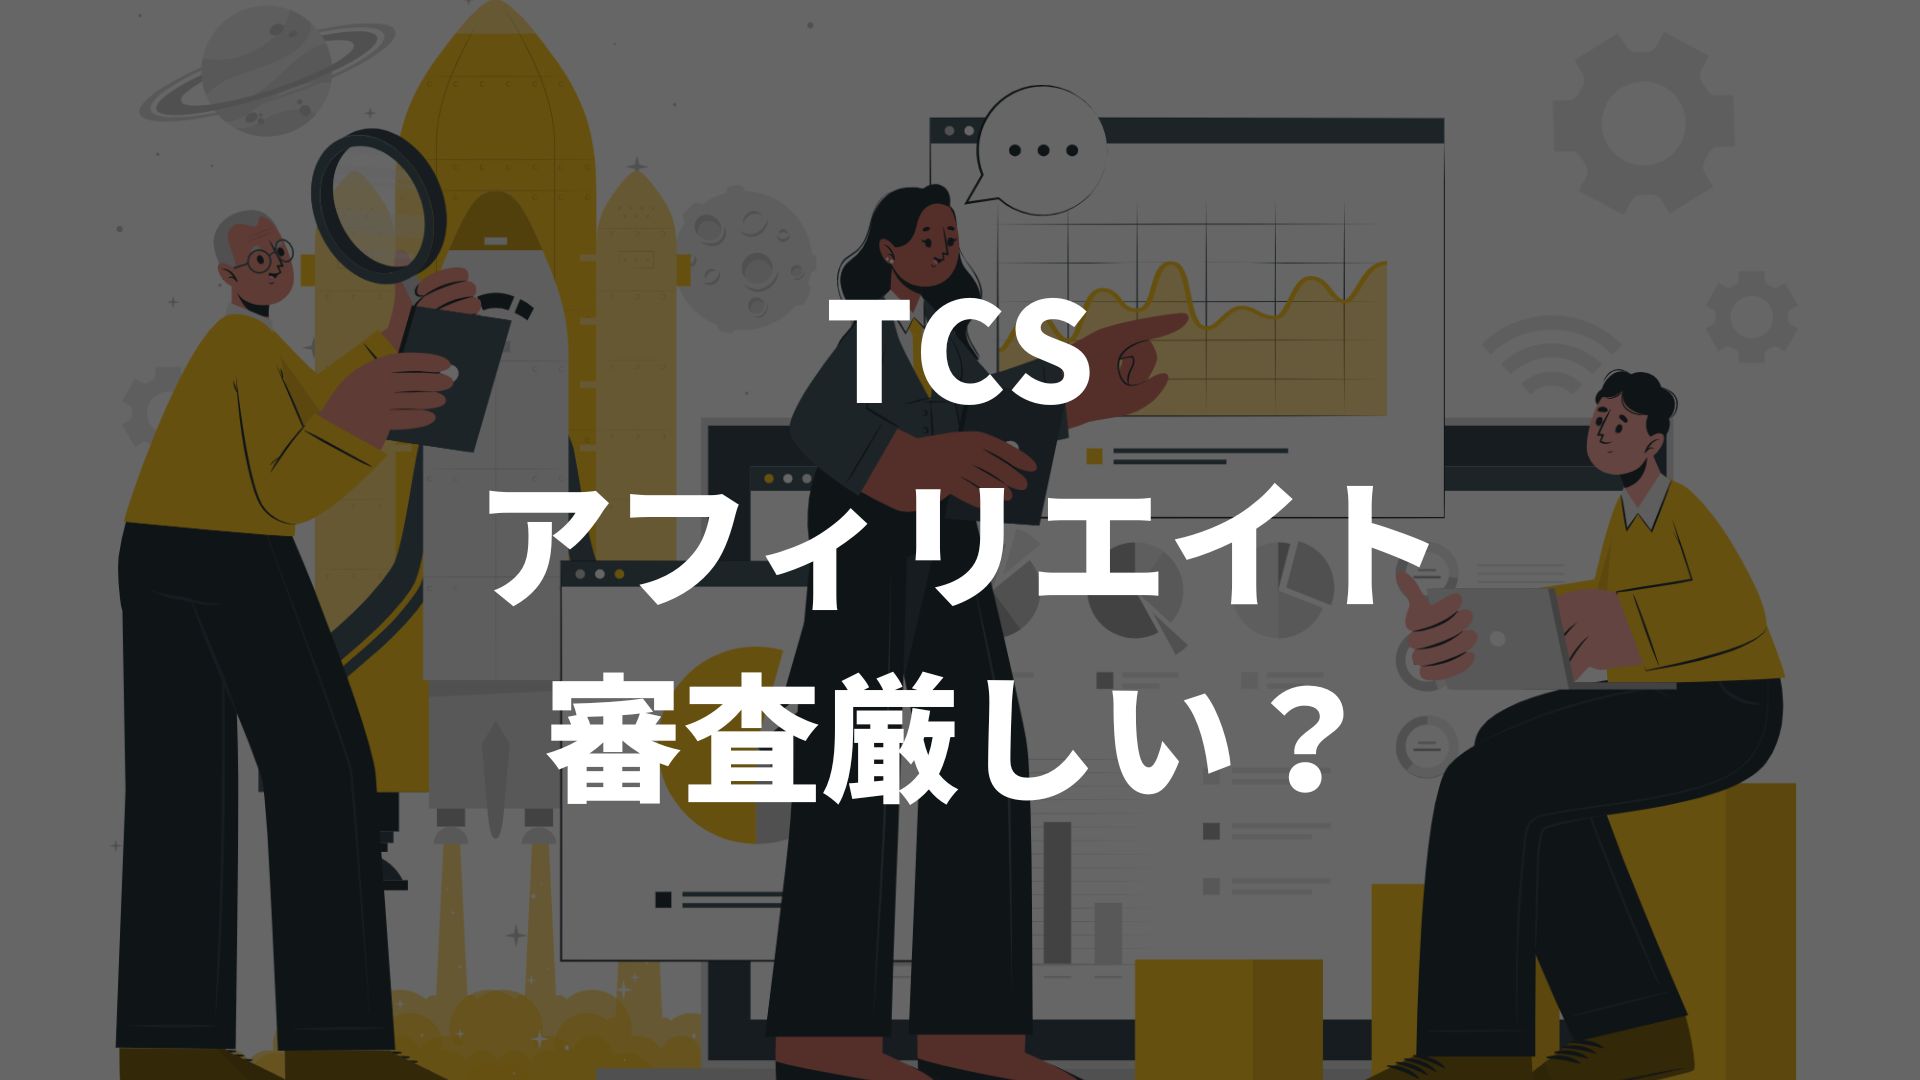 TCSアフィリエイトの審査は難しい？一発合格するための対策やコツを徹底解説